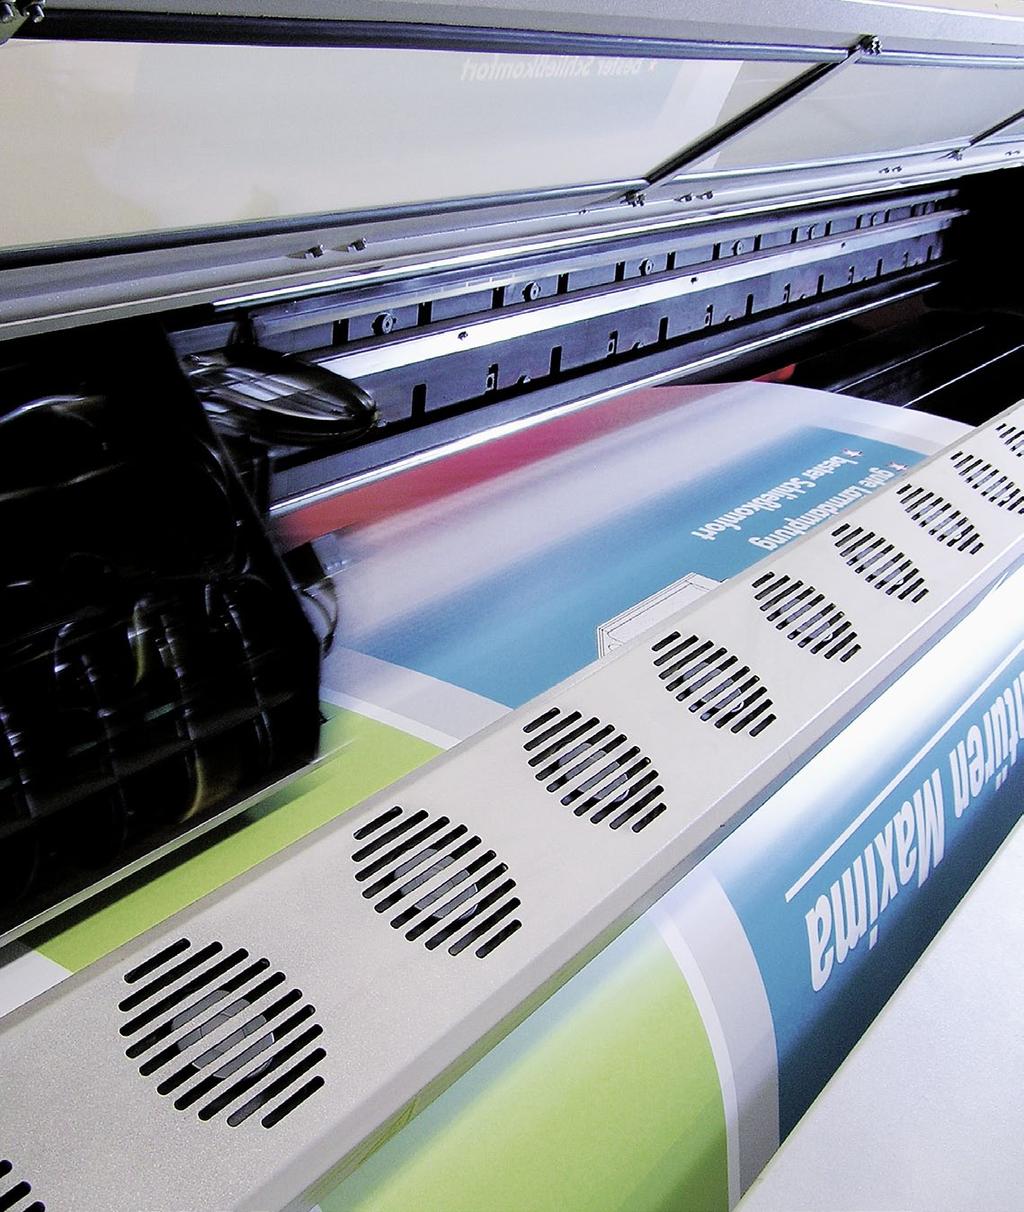 Large-format inkjet printers can